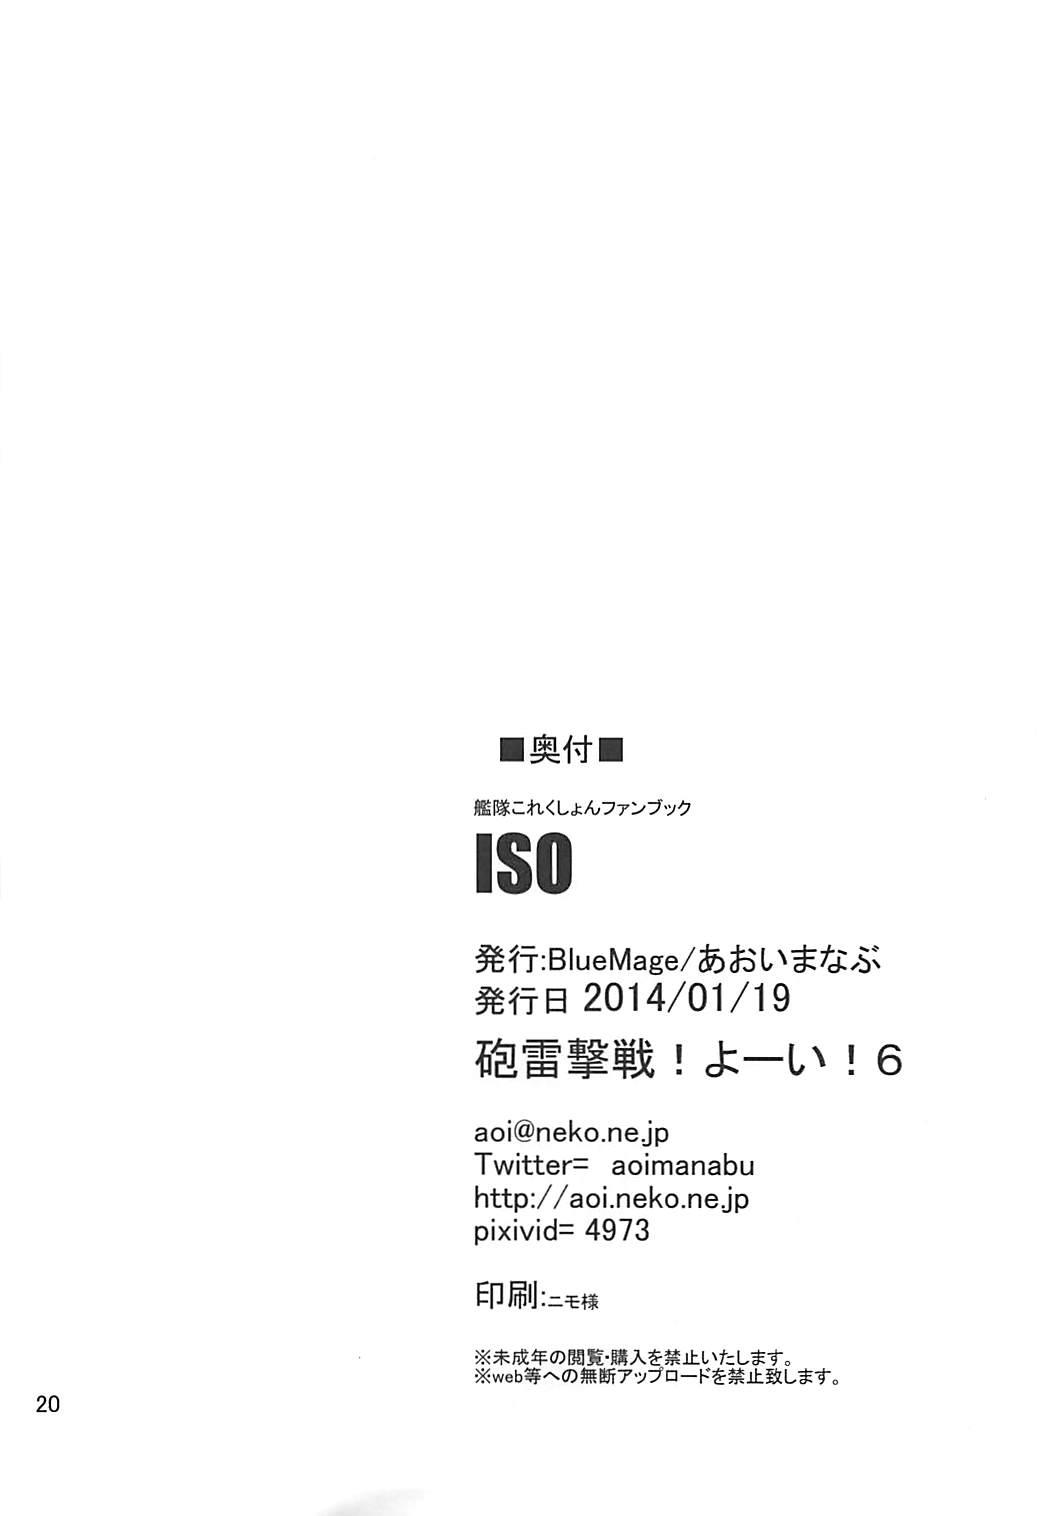 Tesao ISO - Ironbottom Sound Oppai - Kantai collection Uniform - Page 21